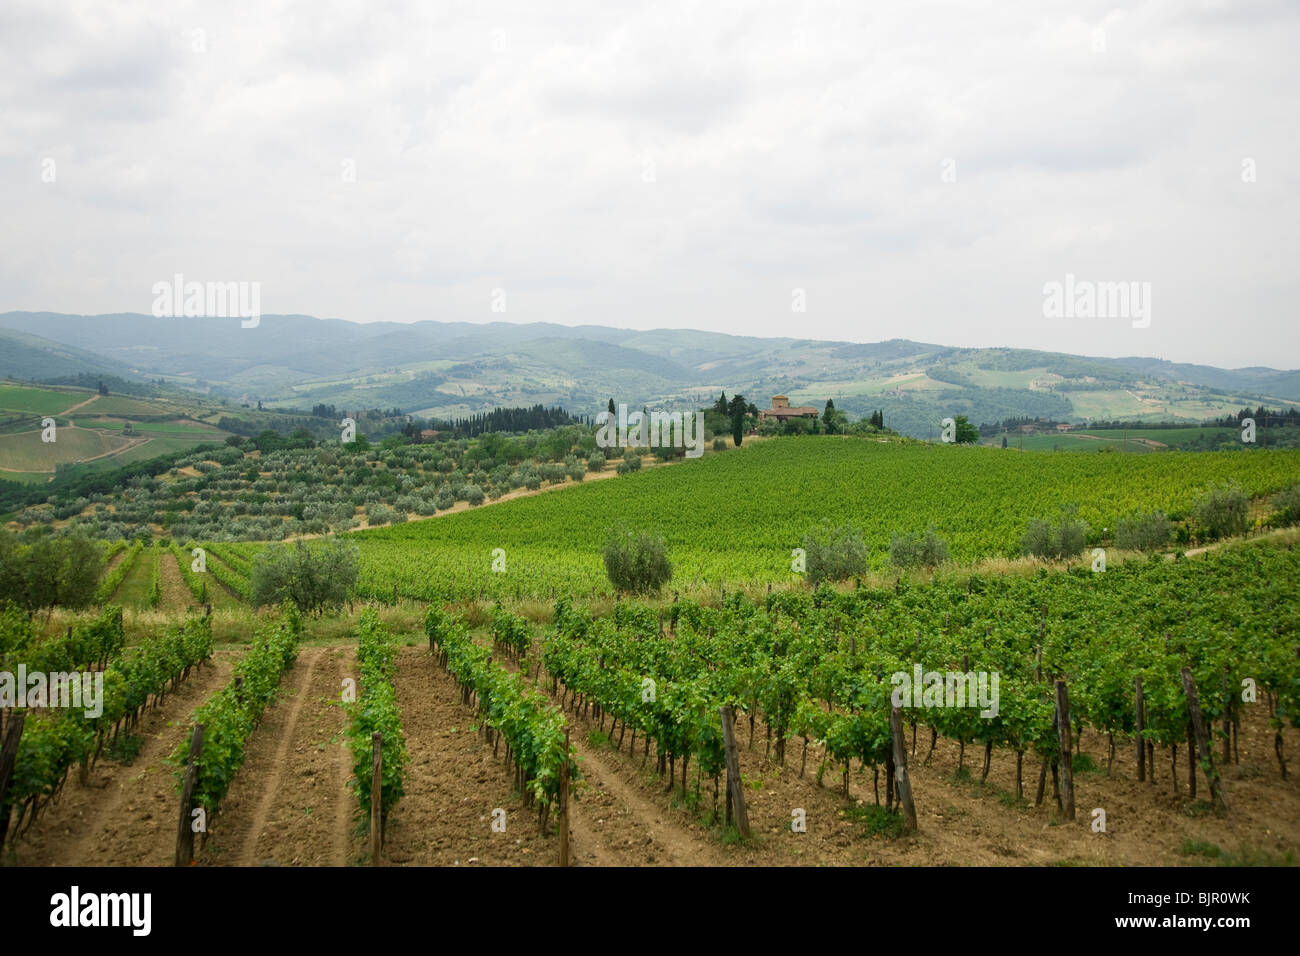 Grape fields in Italy. Stock Photo